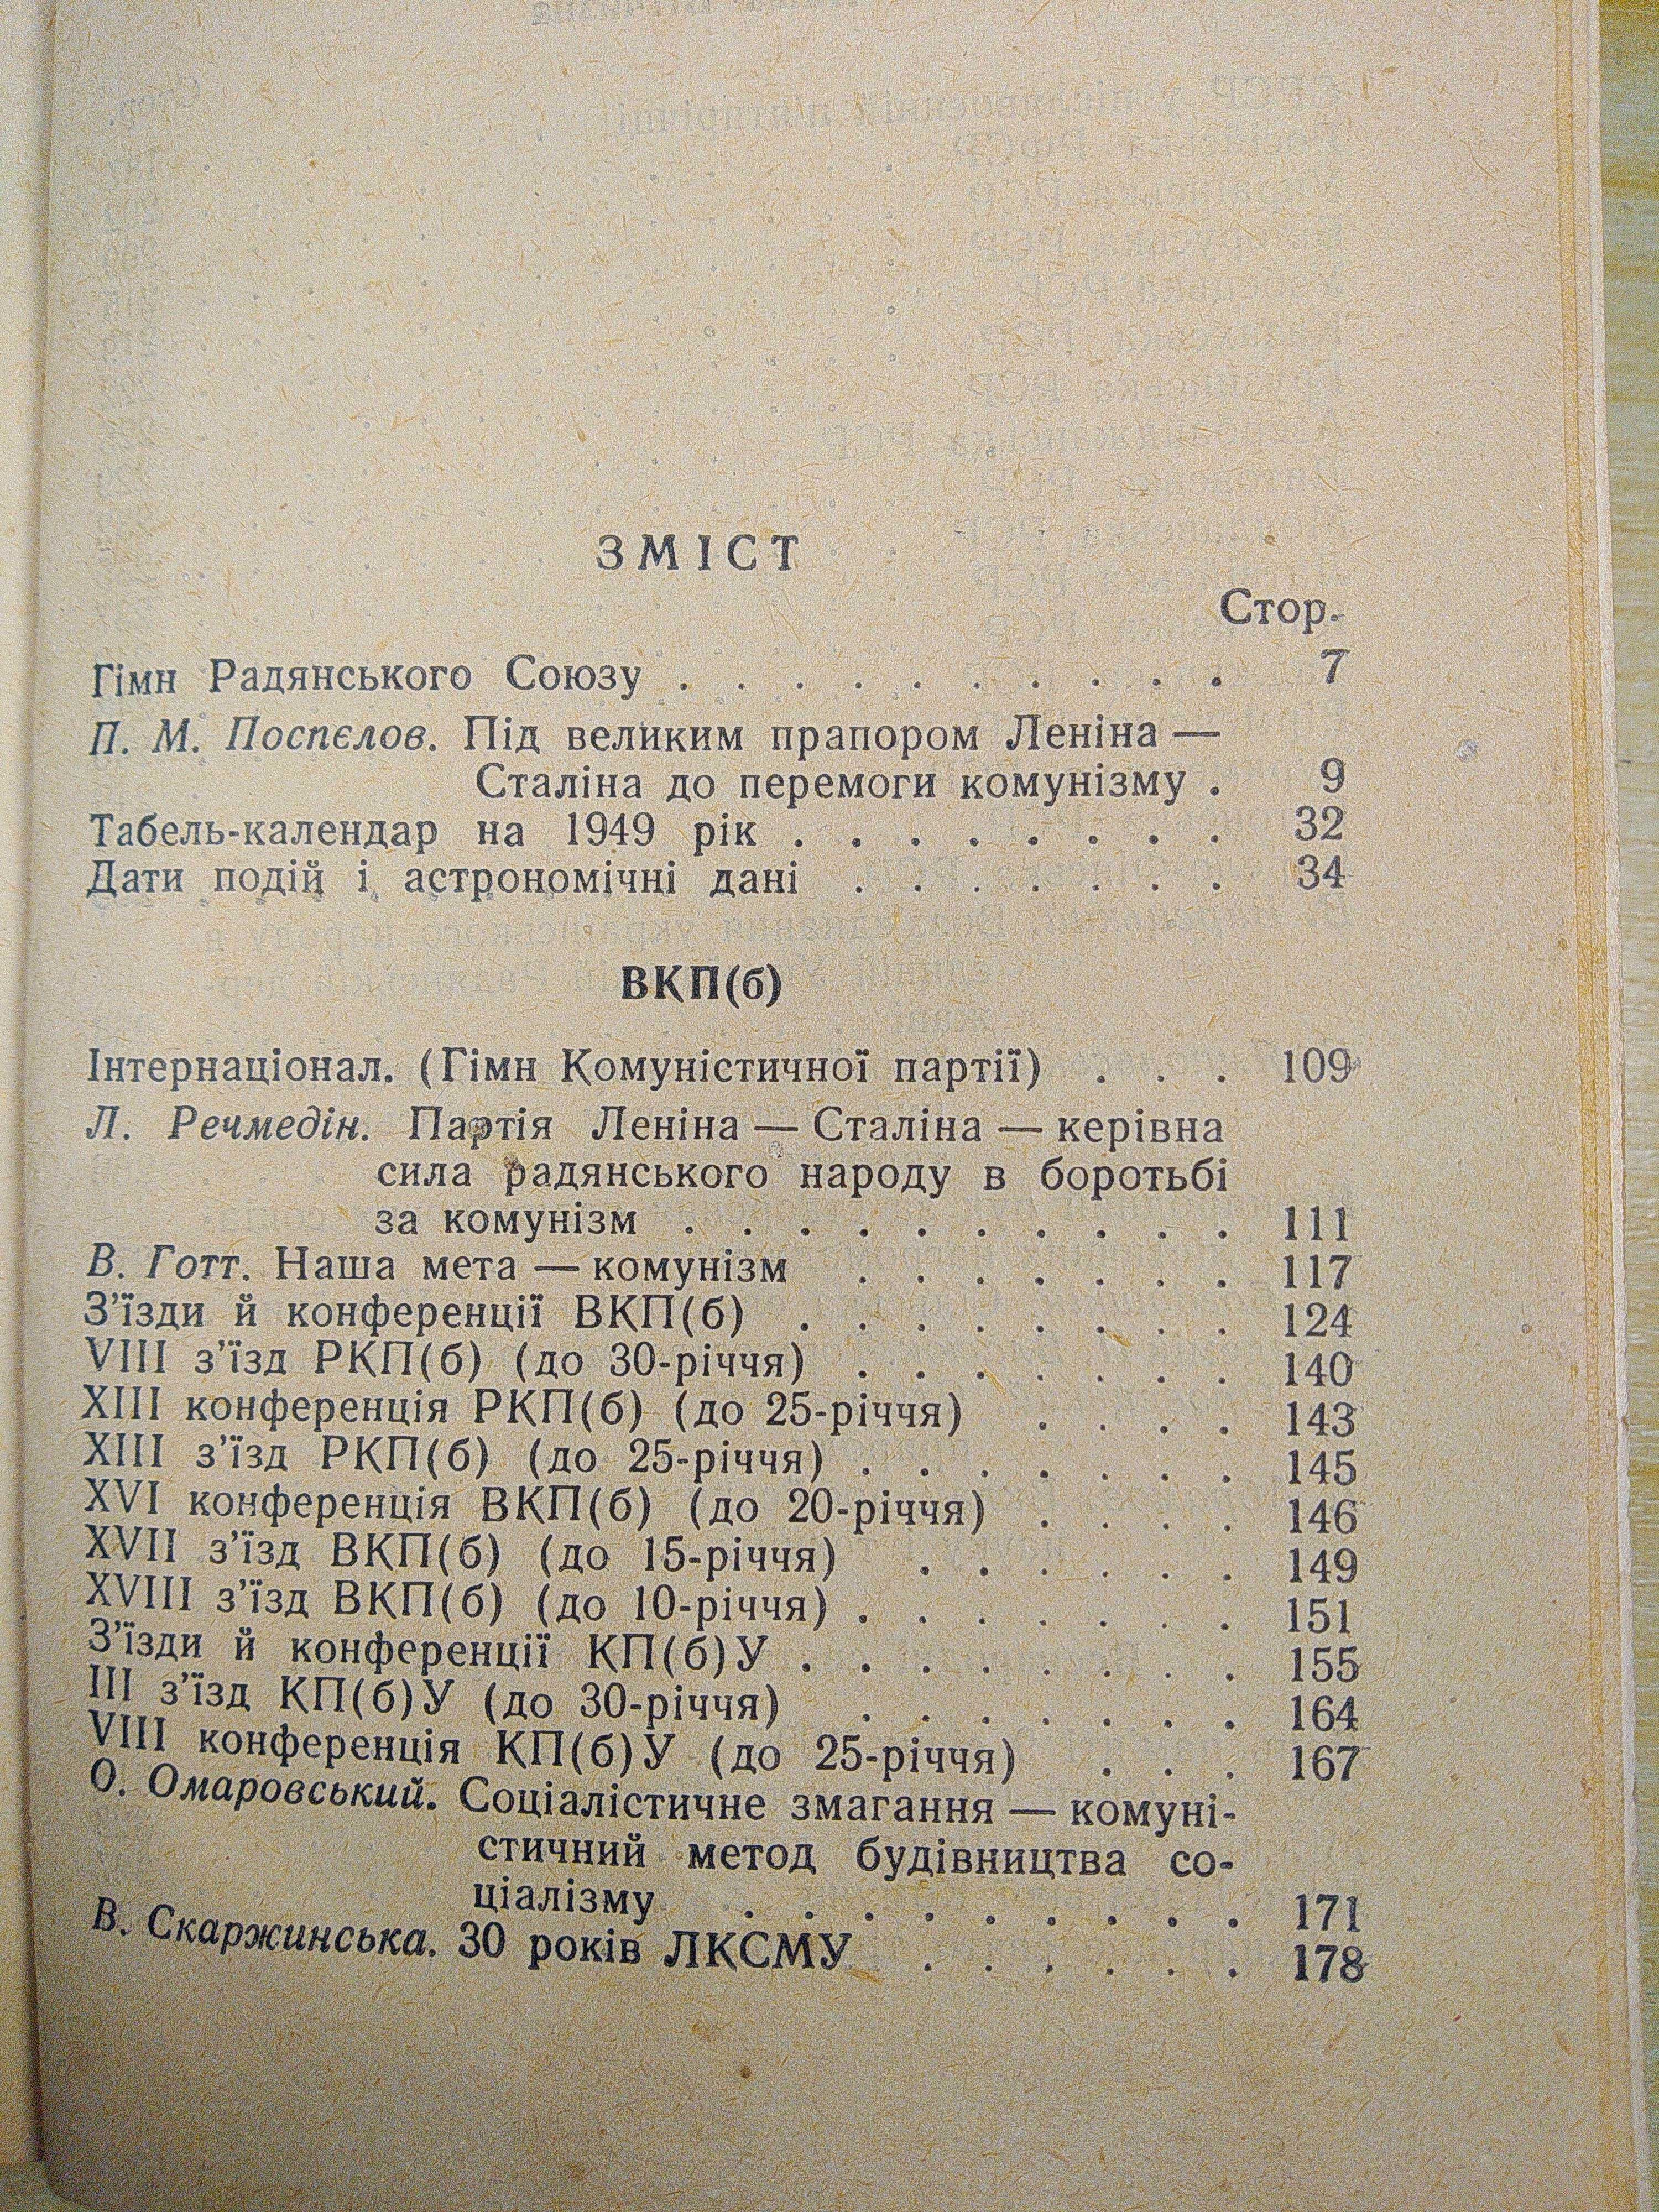 Справочник ежегодник 1949 год  (на украинском языке)